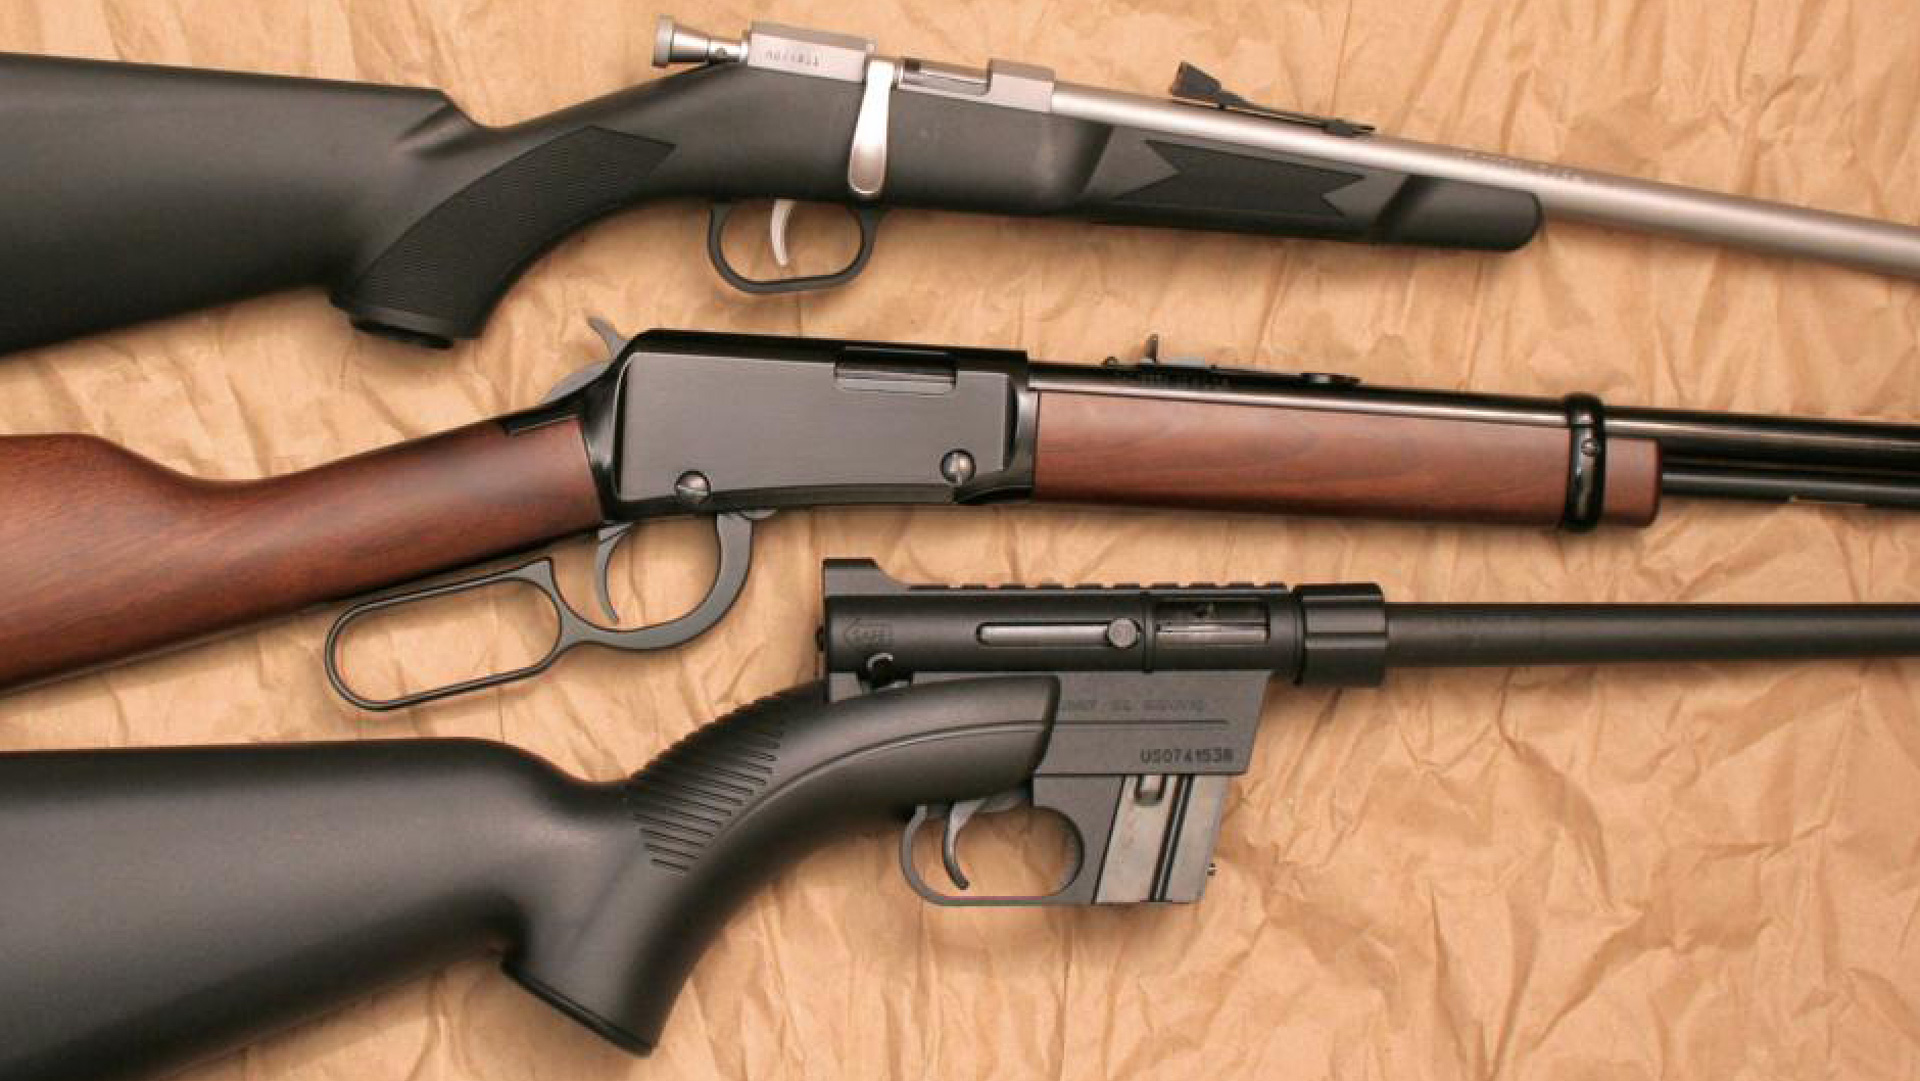 NRA Women  Do .22 LR Rifles Make Sense for Home Defense?